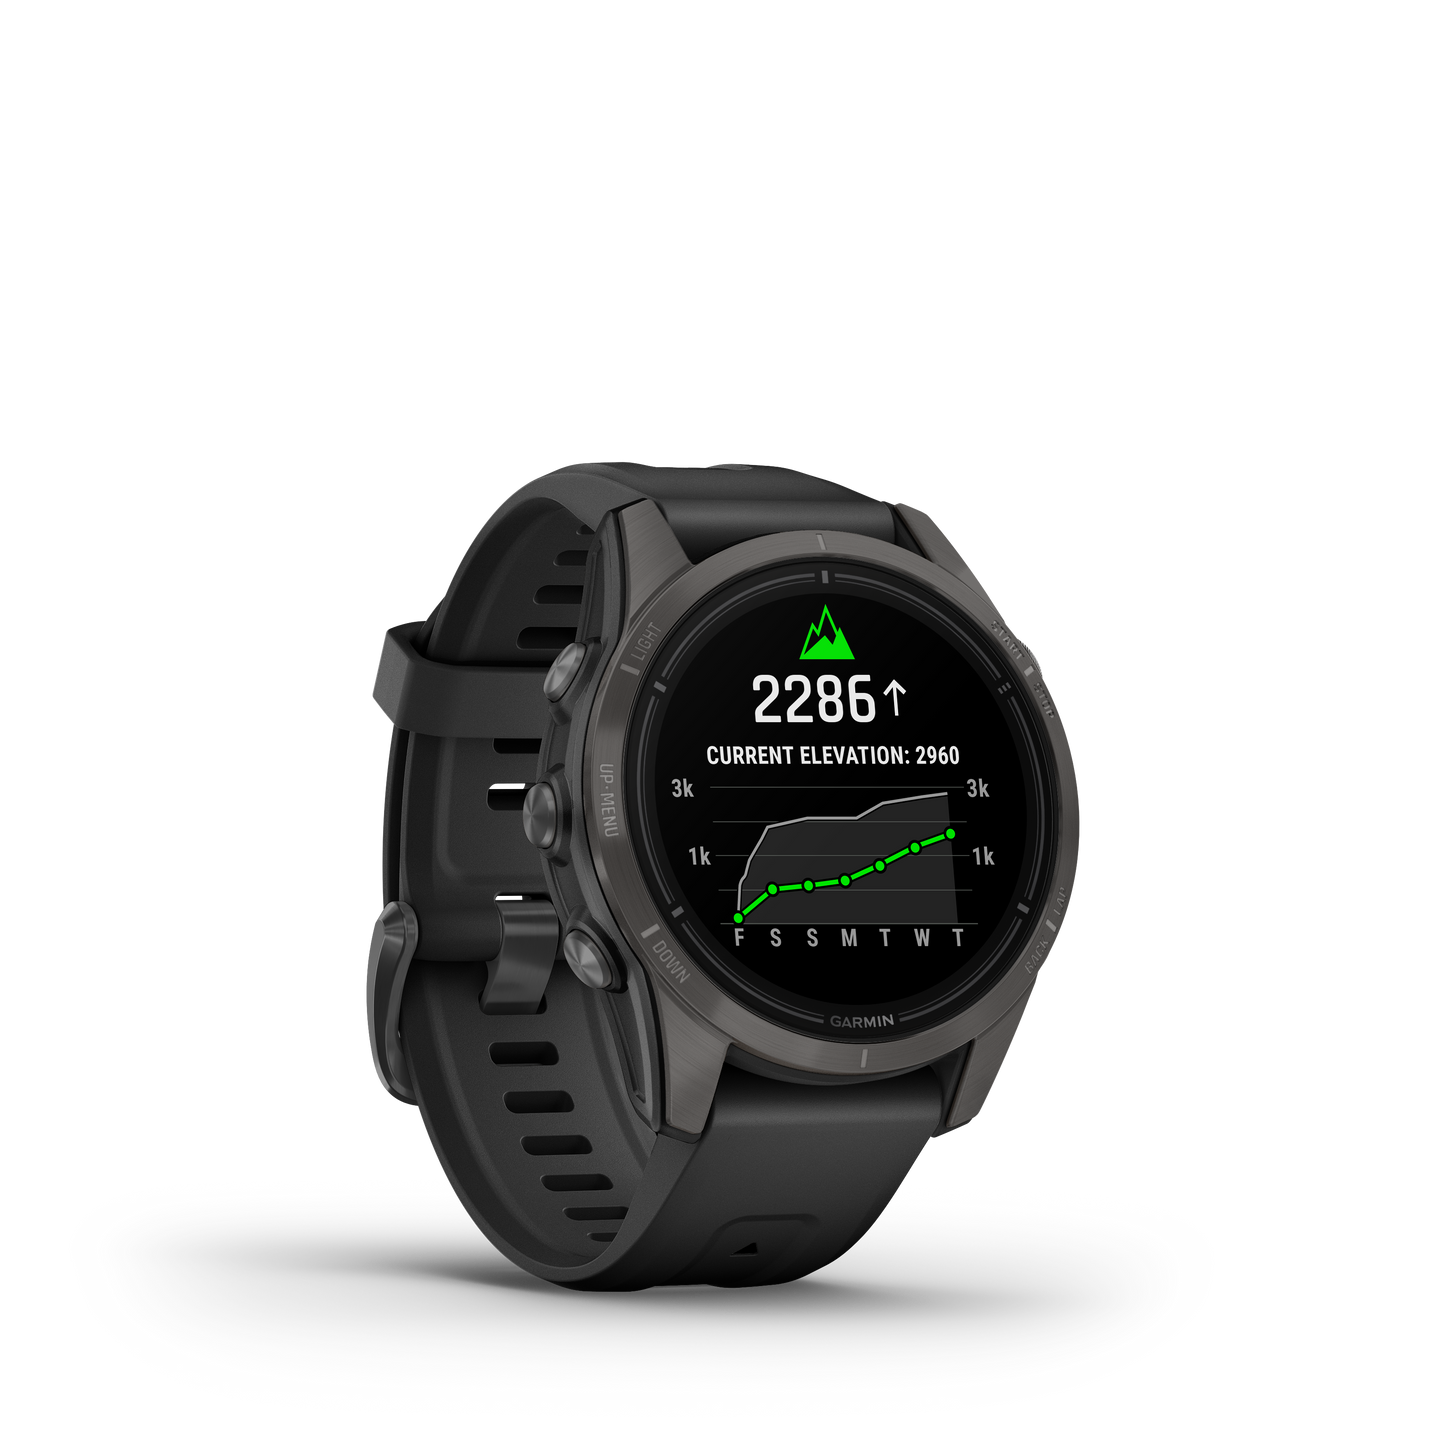 Garmin Epix™ Pro（第 2 代）- 蓝宝石版 42 毫米智能手表